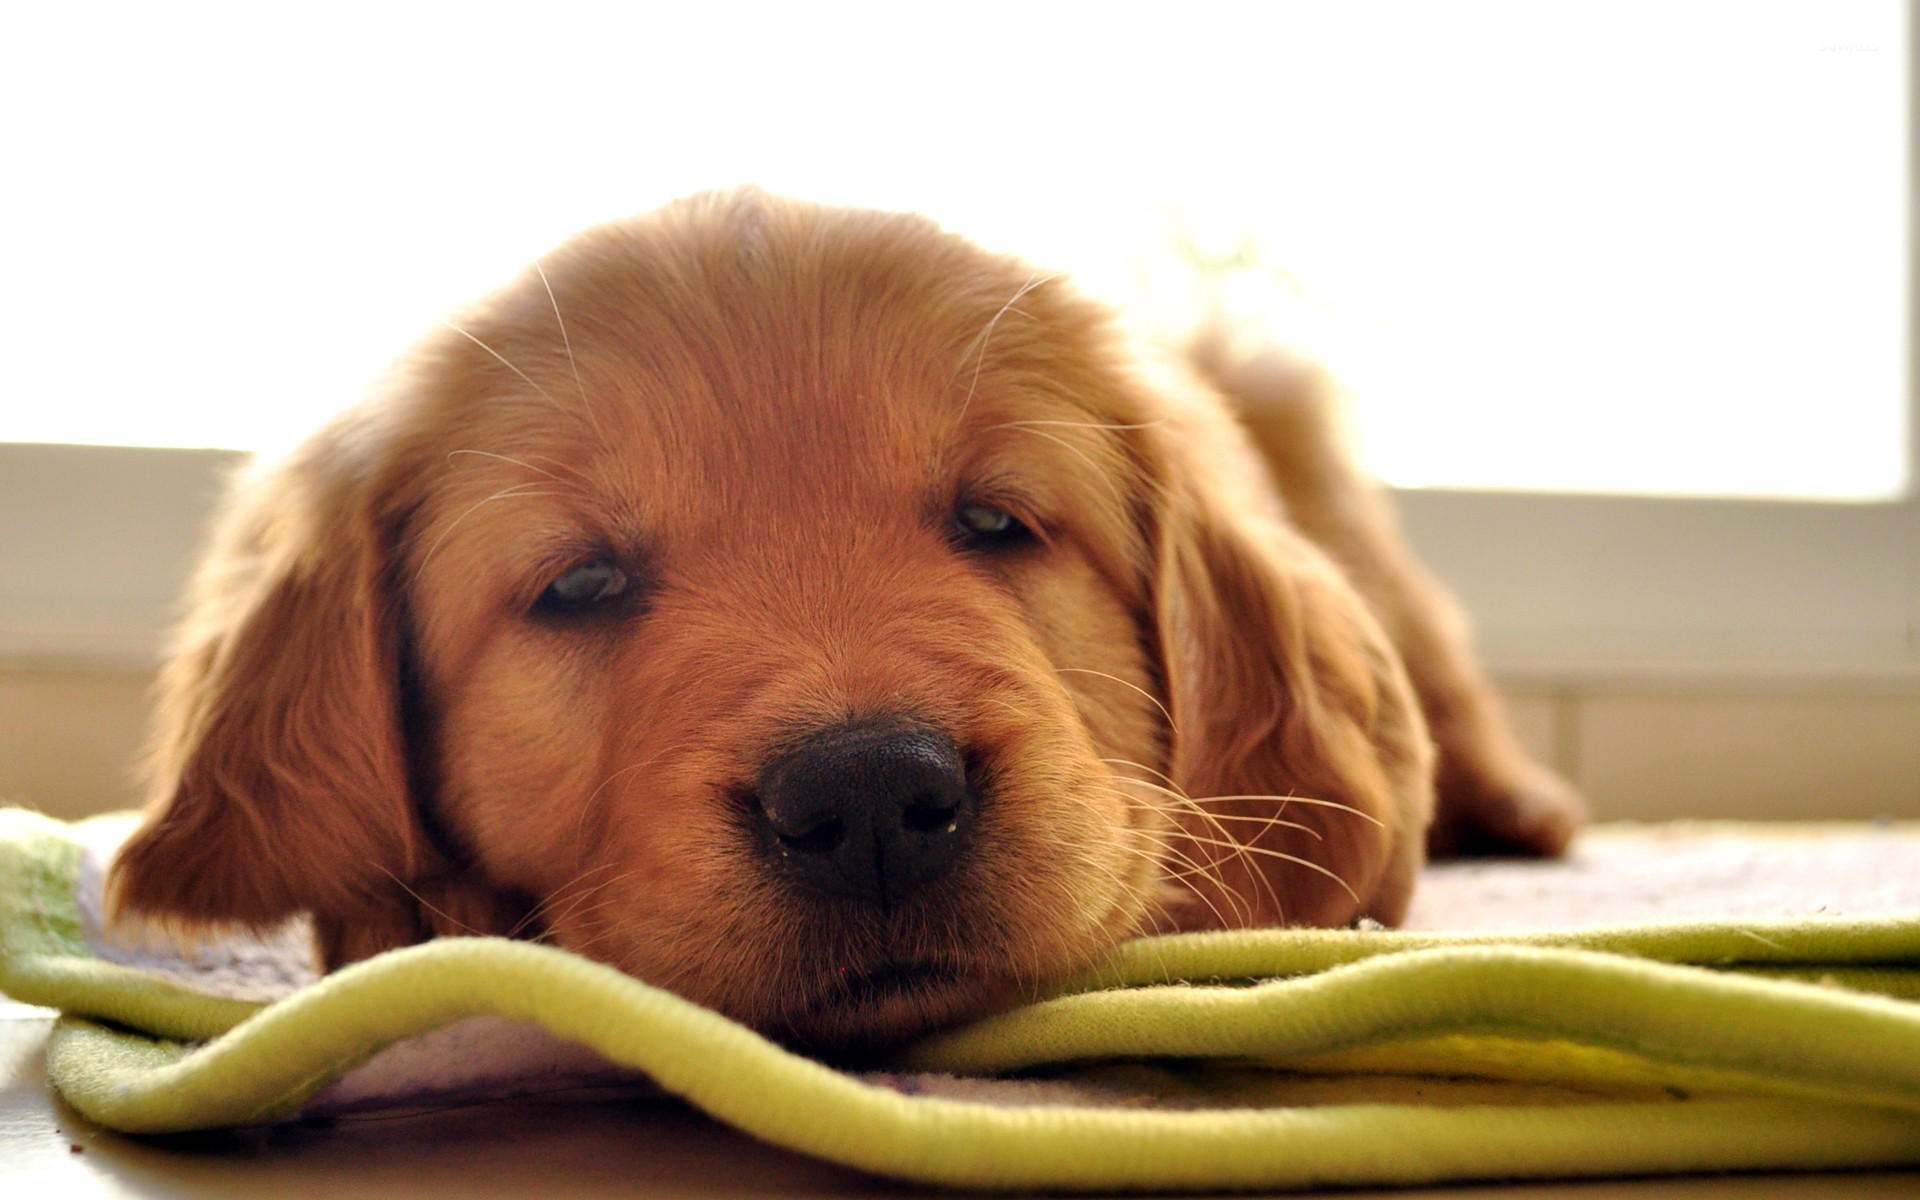 Sleepy Golden Retriever puppy wallpaper - Animal wallpapers - #22503